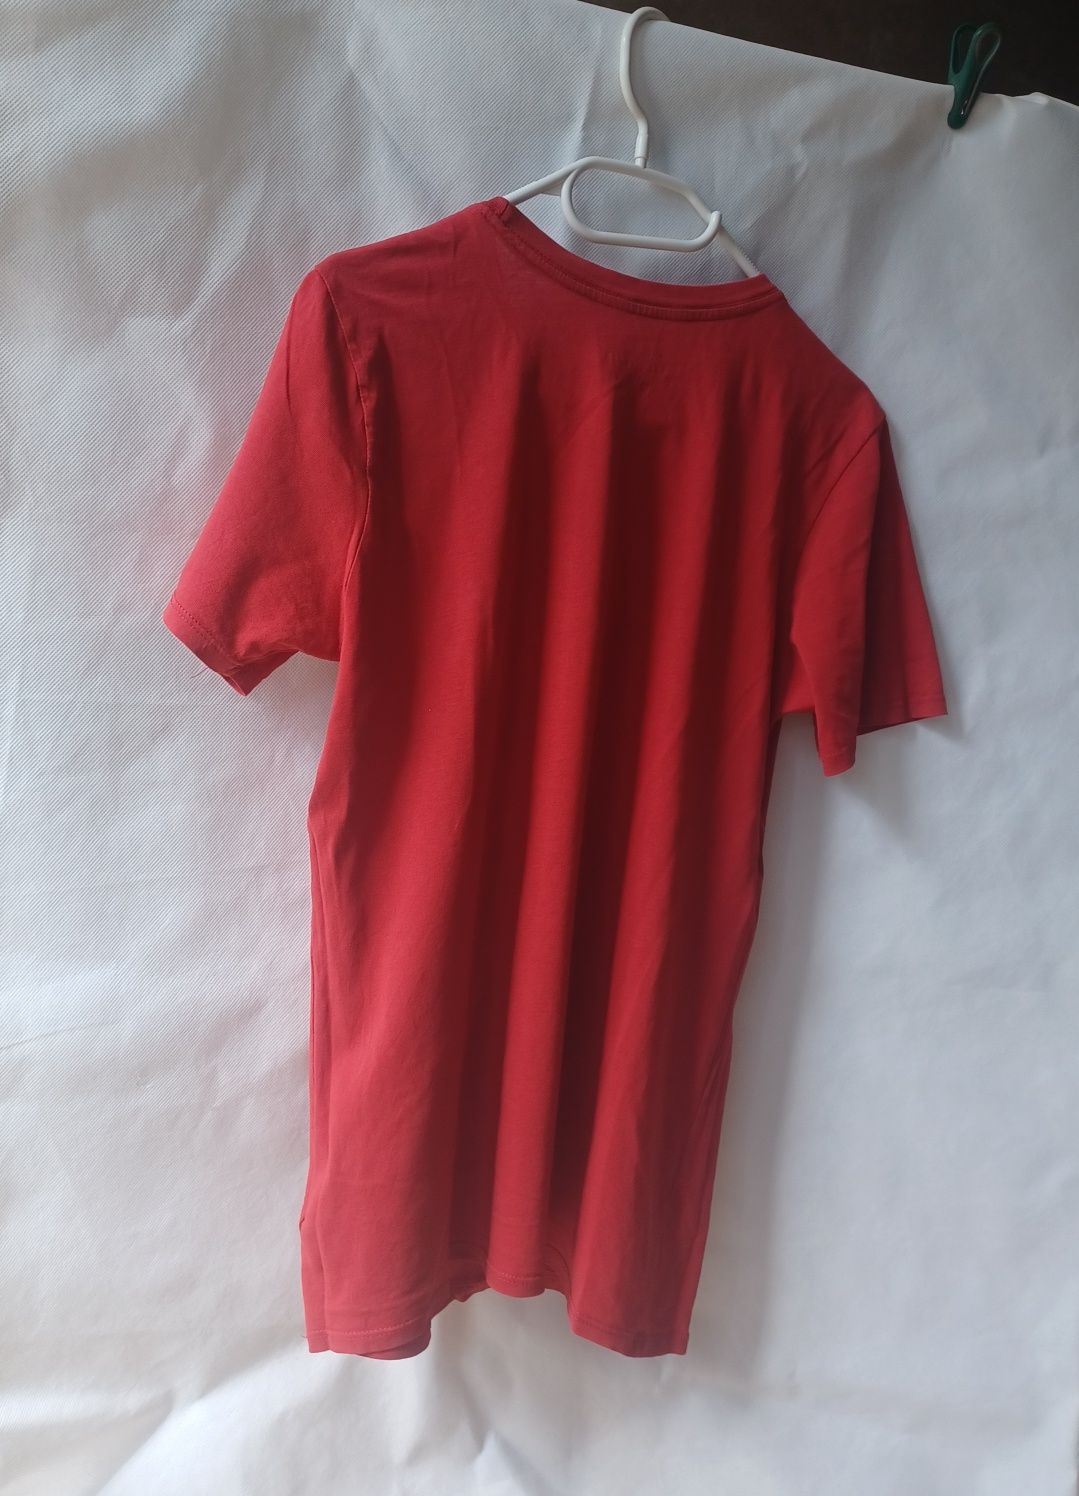 The Nike Tee czerwona koszulka podkoszulek T-shirt bluzka męska S